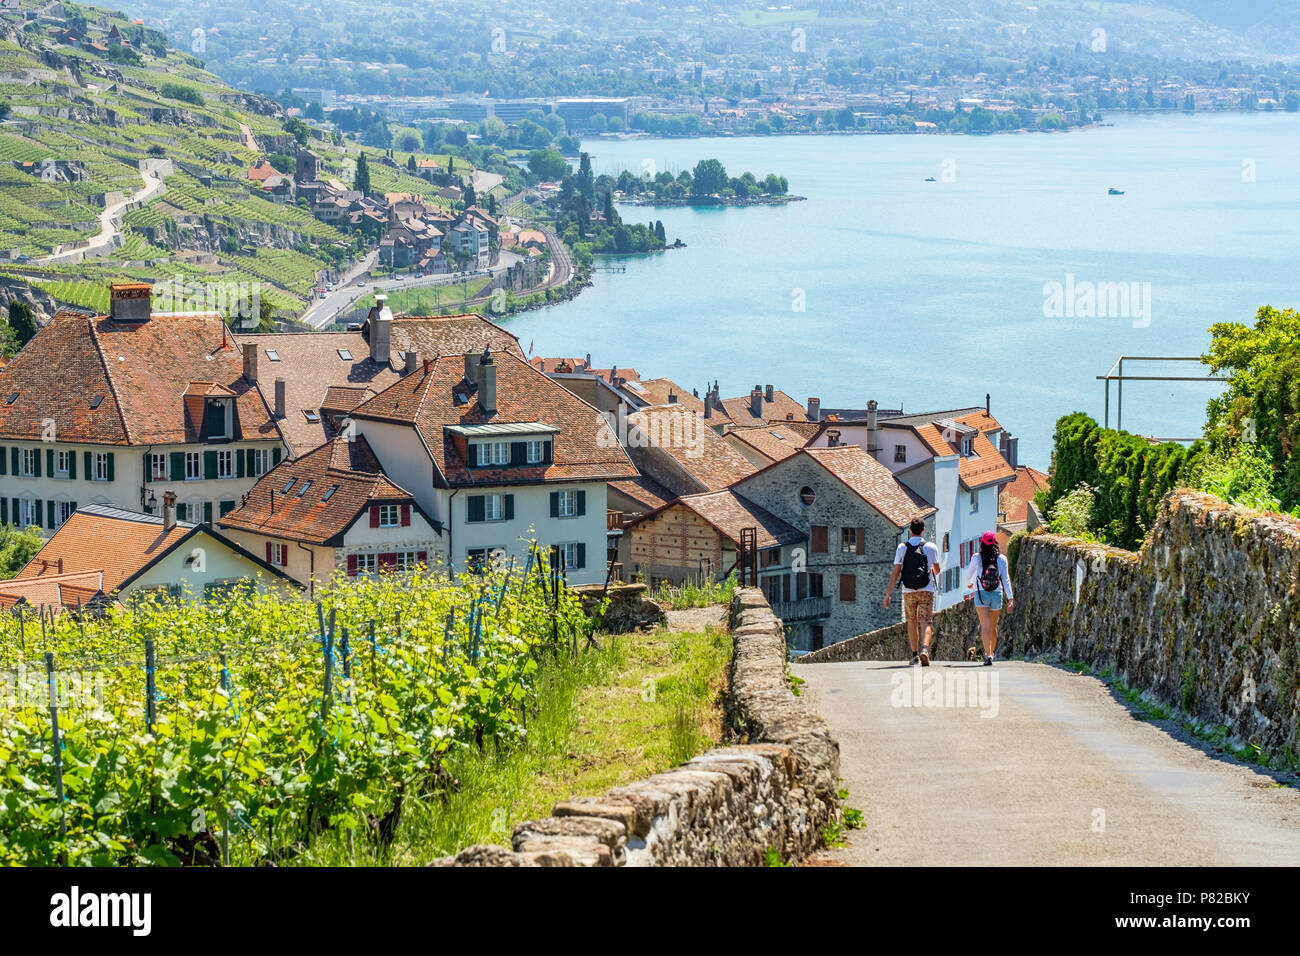 Zwei jungen Touristen wandern in Richtung des Dorfes Rivaz, Schweiz Stockfoto